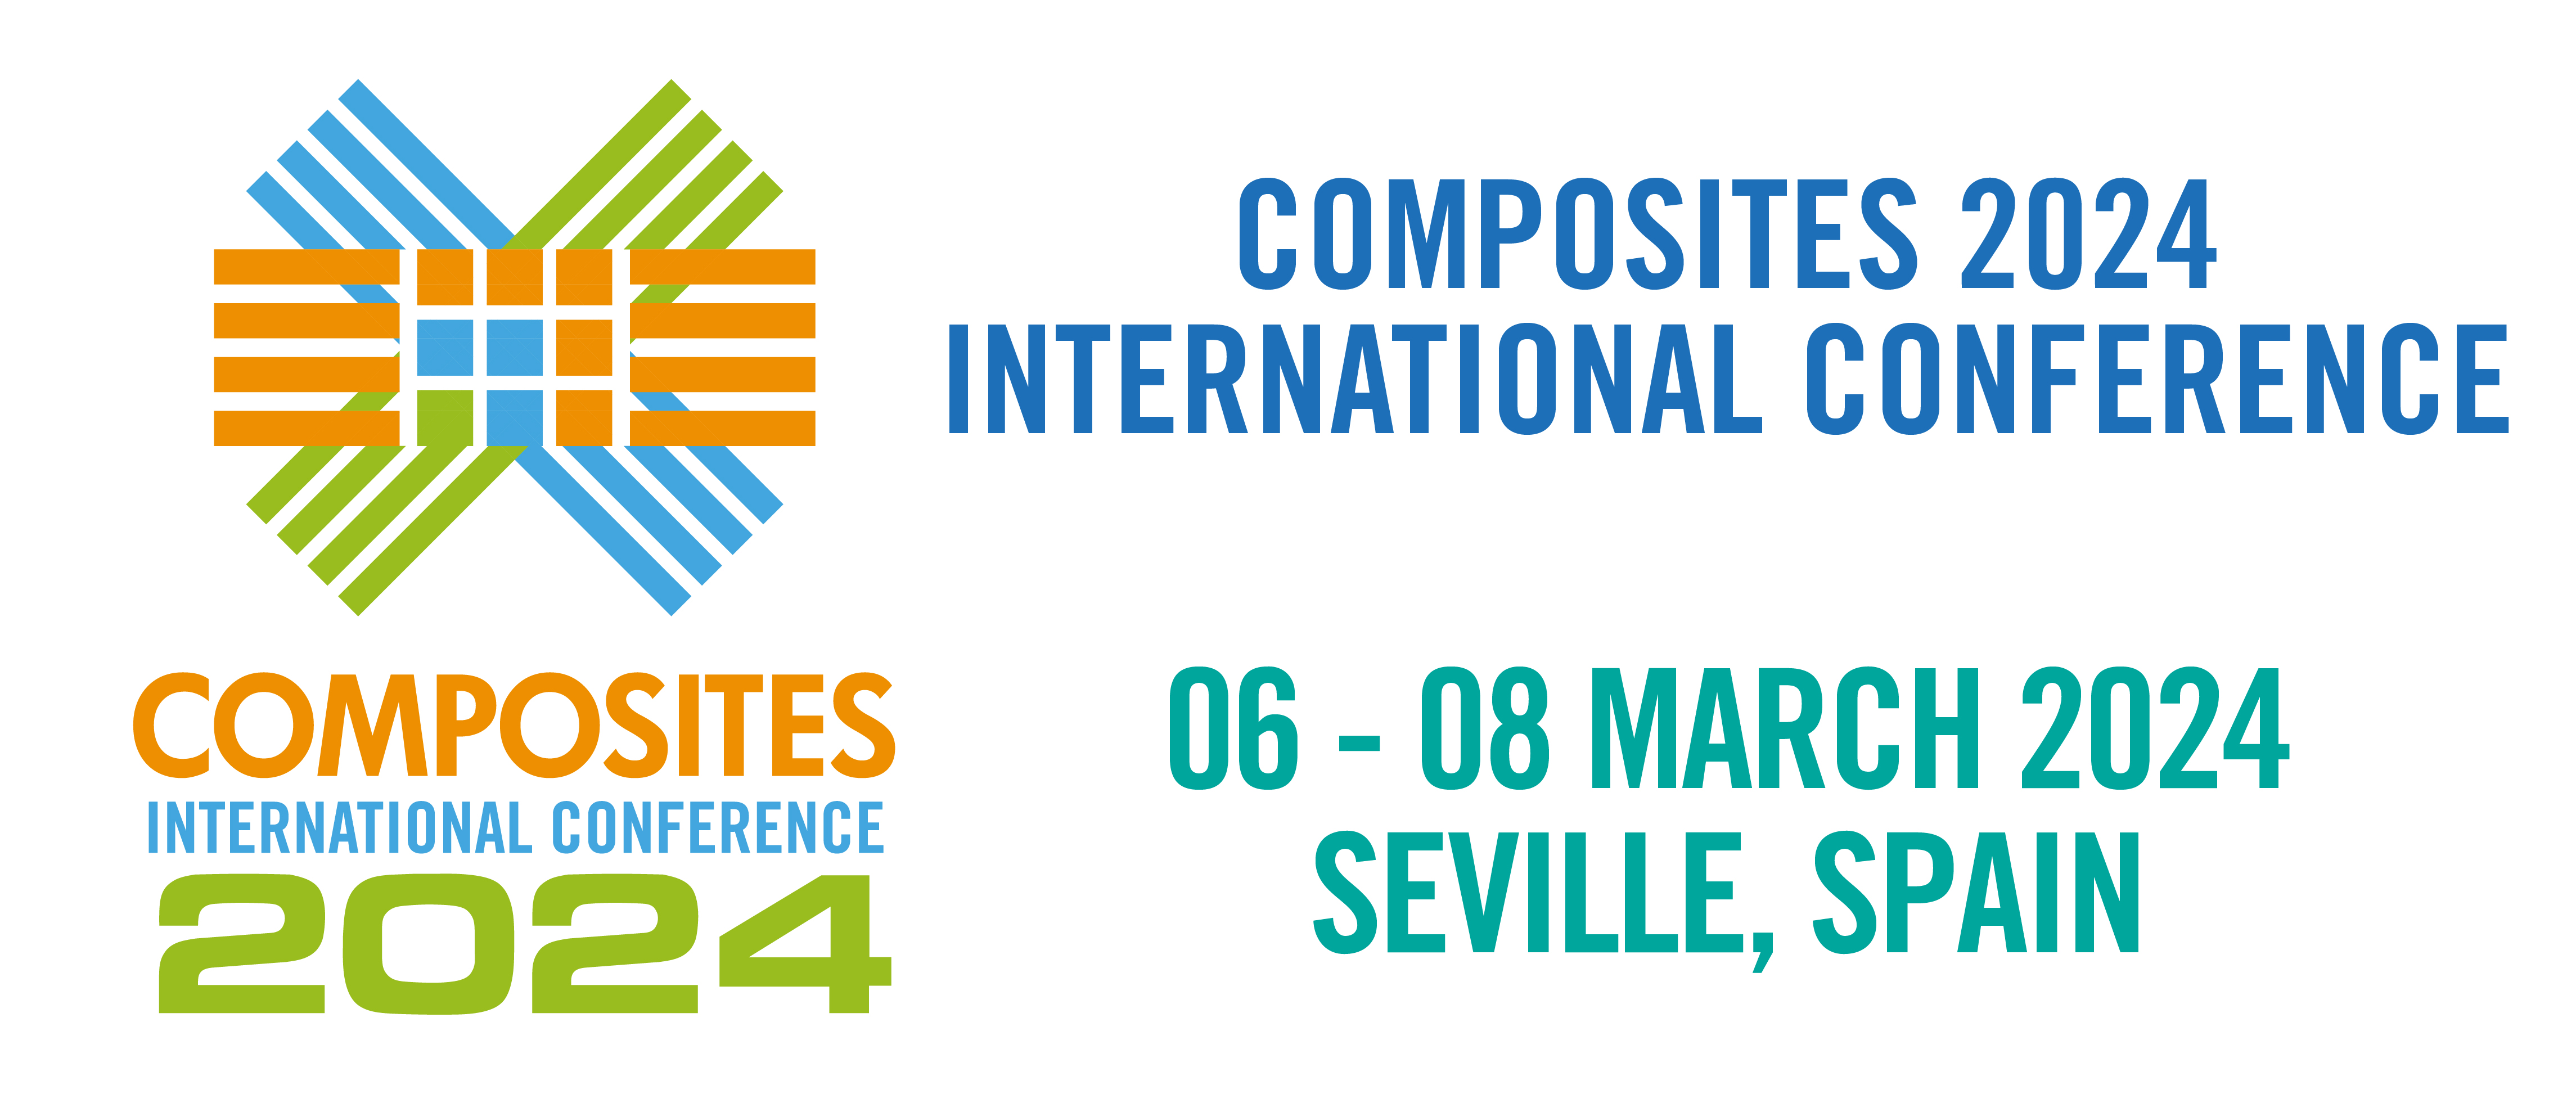 Composites International Conference - Composites 2024